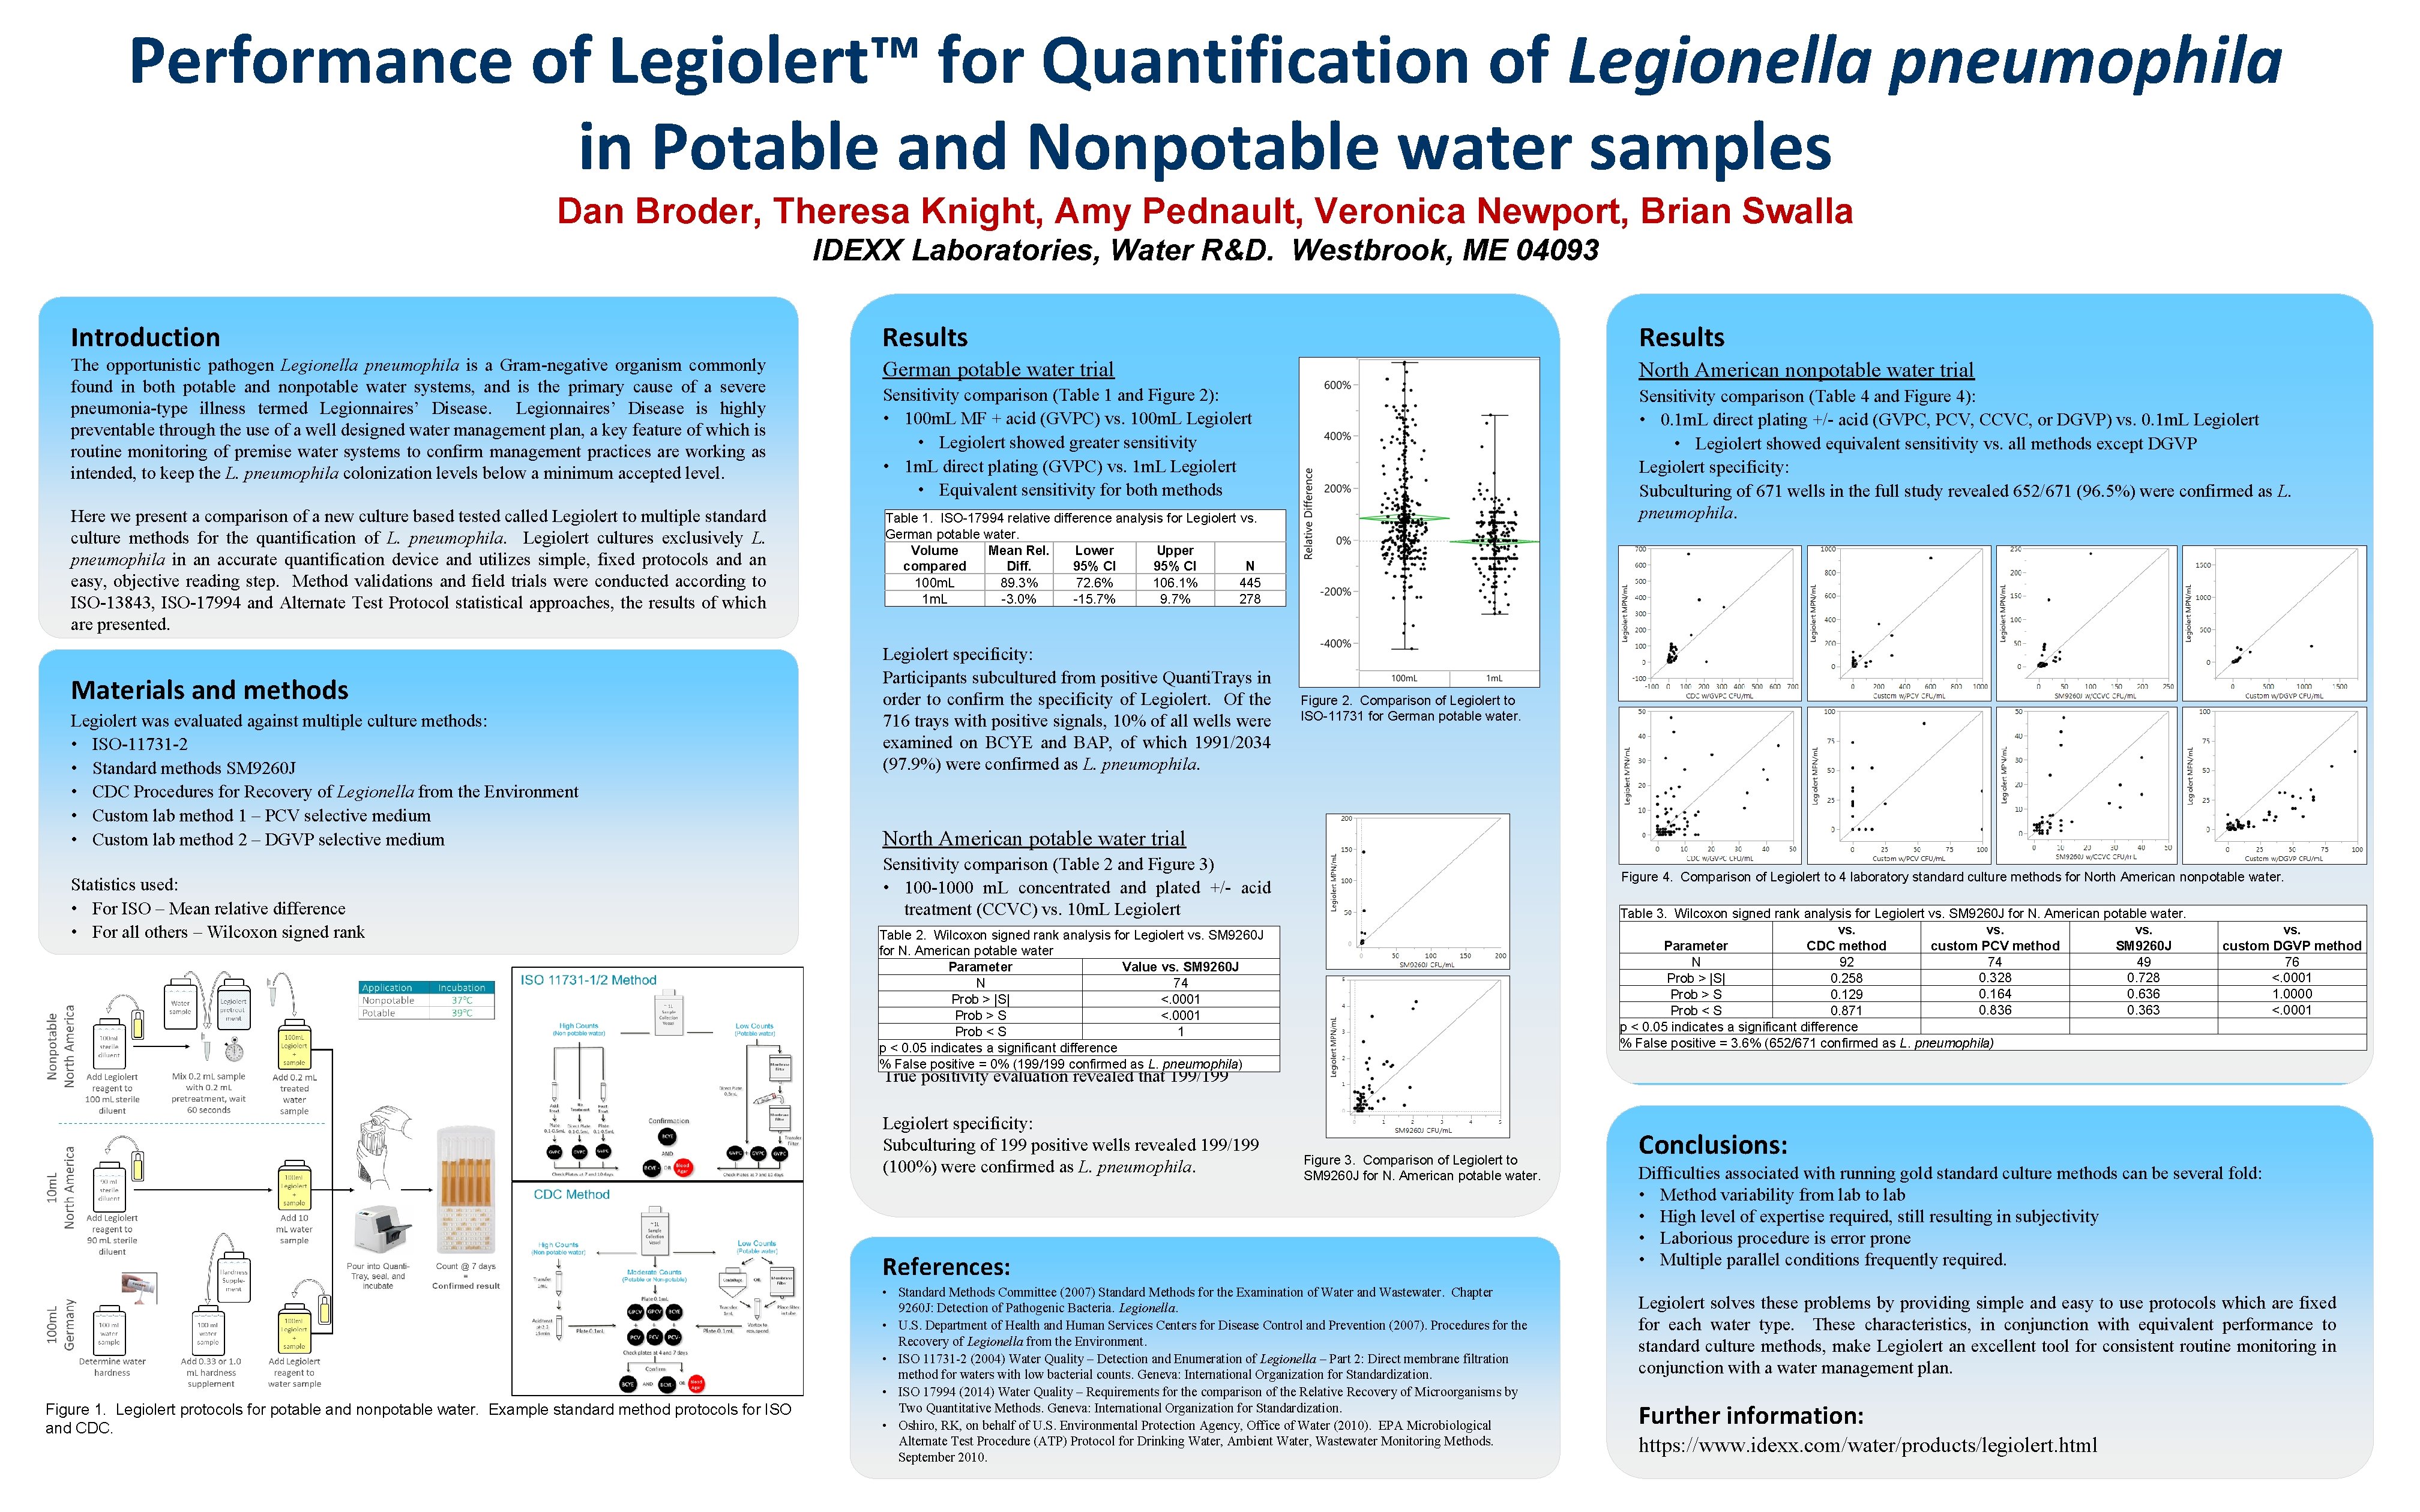 Performance of Legiolert™ for Quantification of Legionella pneumophila in Potable and Nonpotable water samples